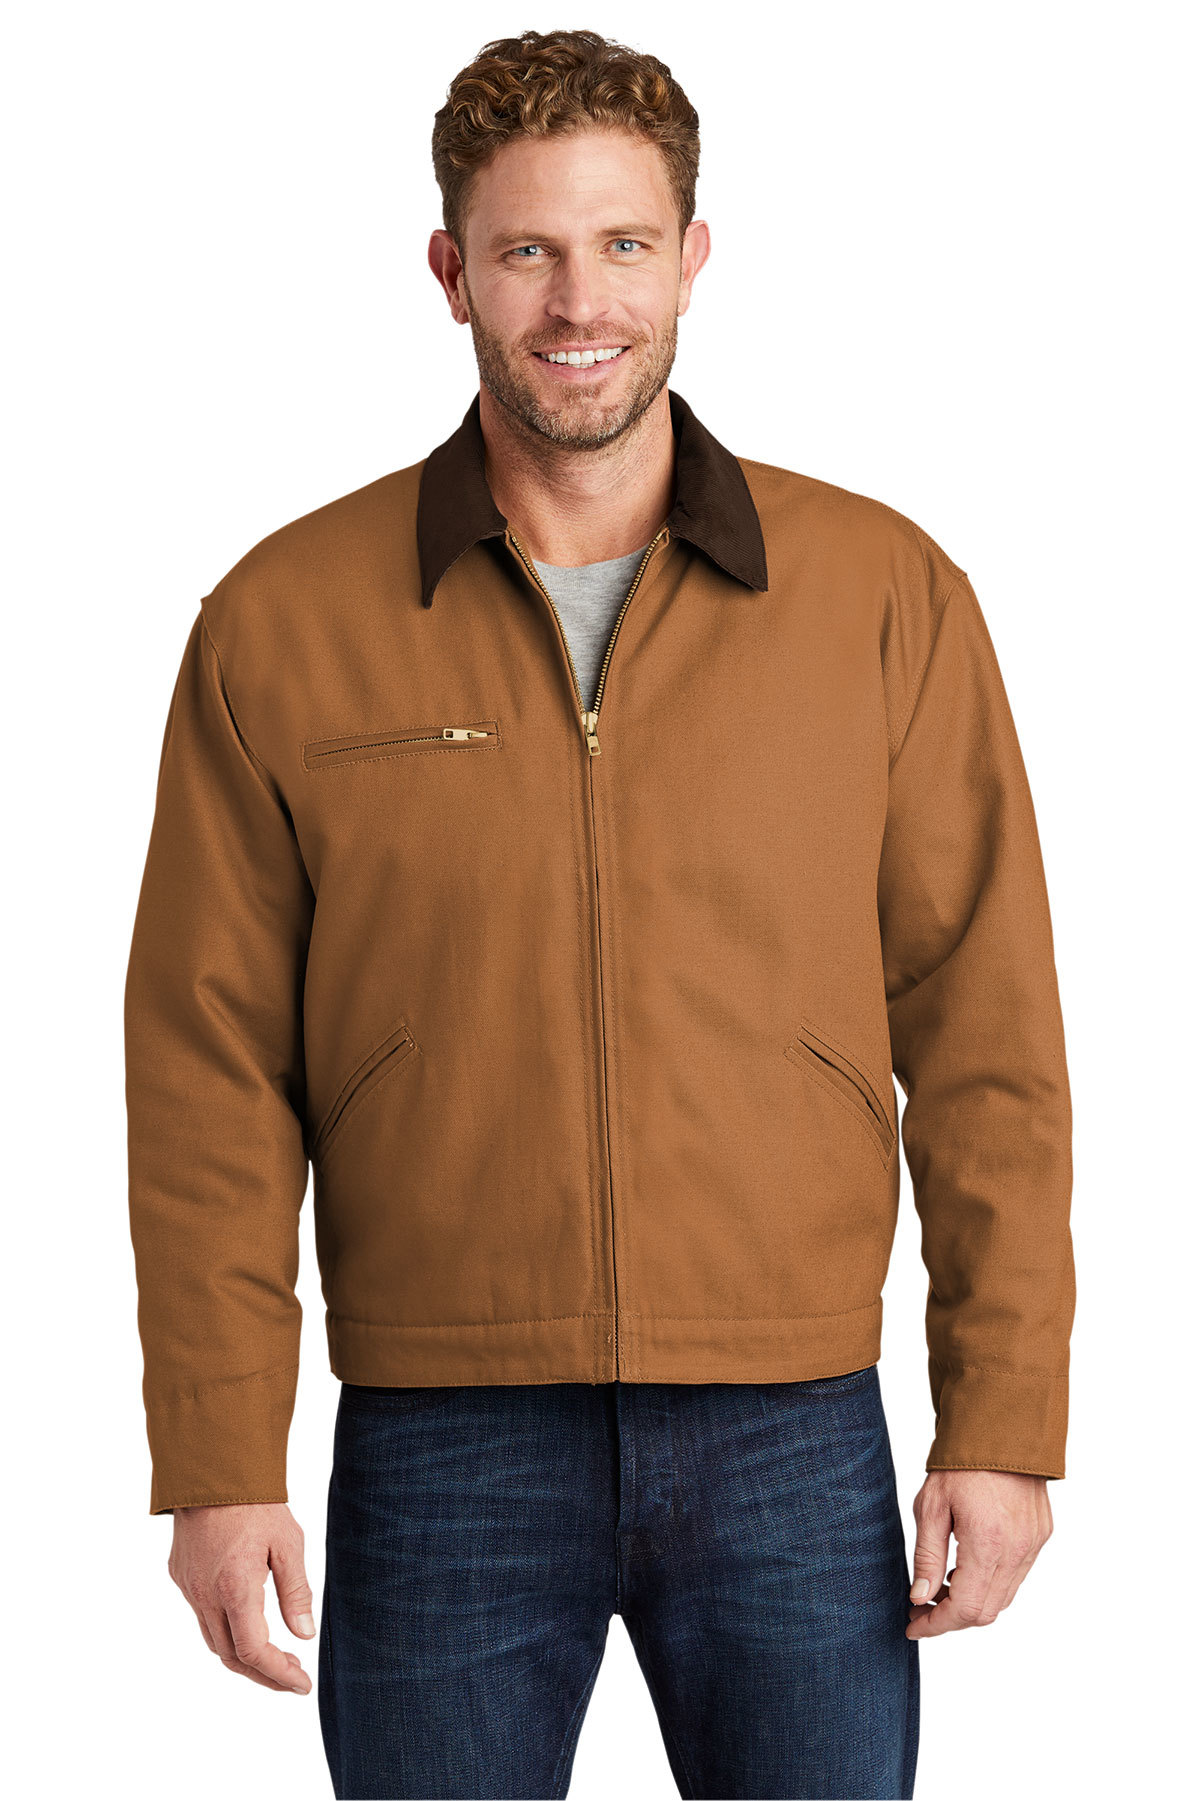 Duck Cloth Work Jacket | Product | CornerStone - CornerStone